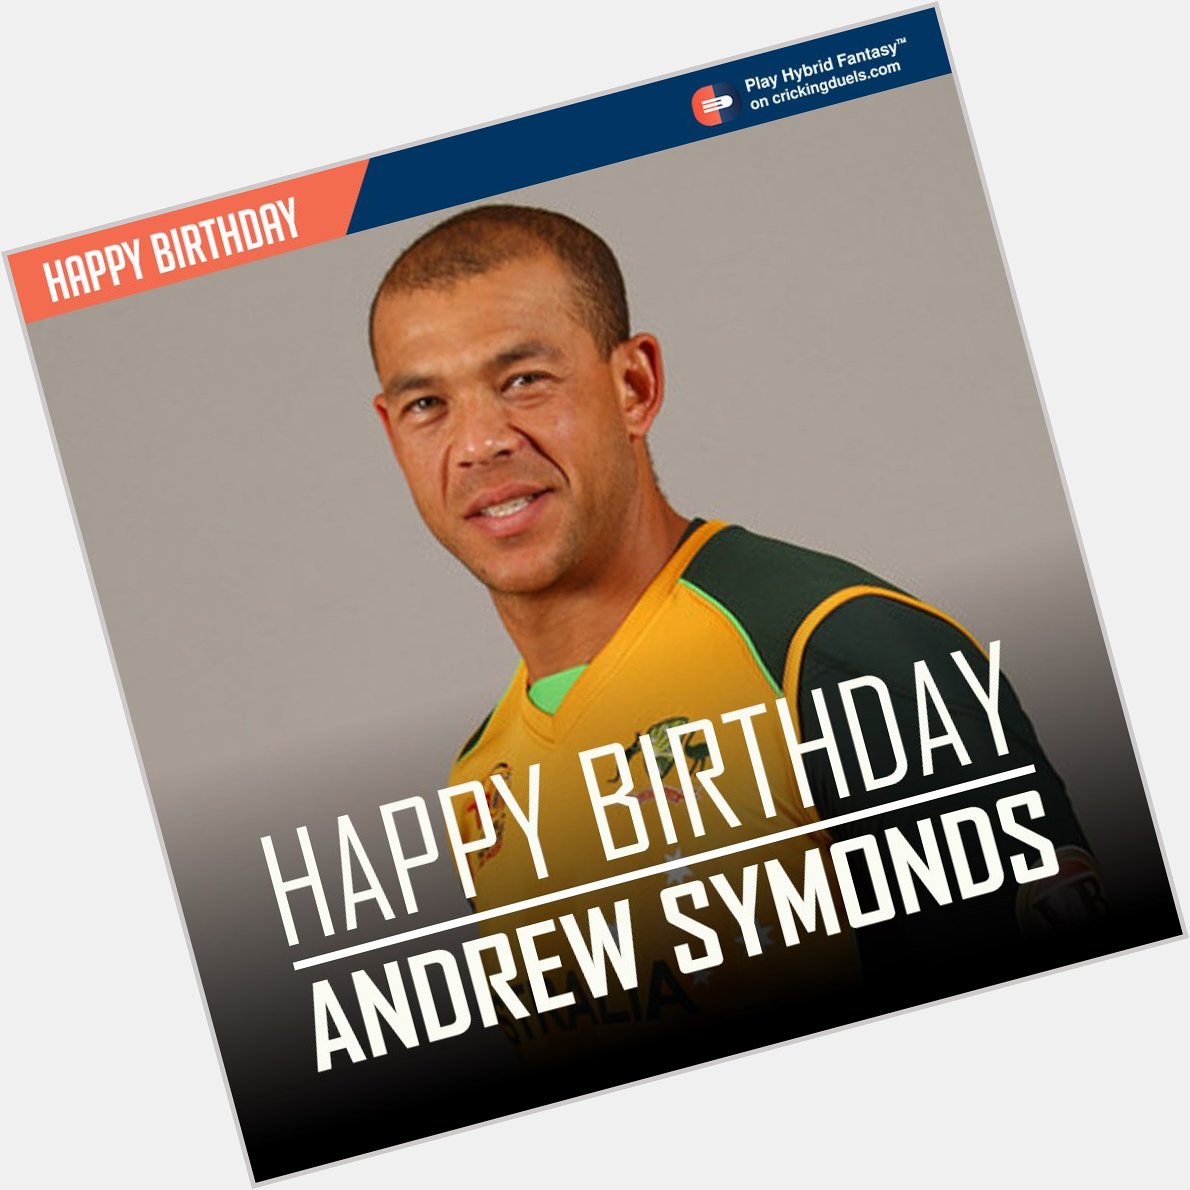 Happy Birthday Andrew Symonds. The former Australian cricketer turns 42 today. 